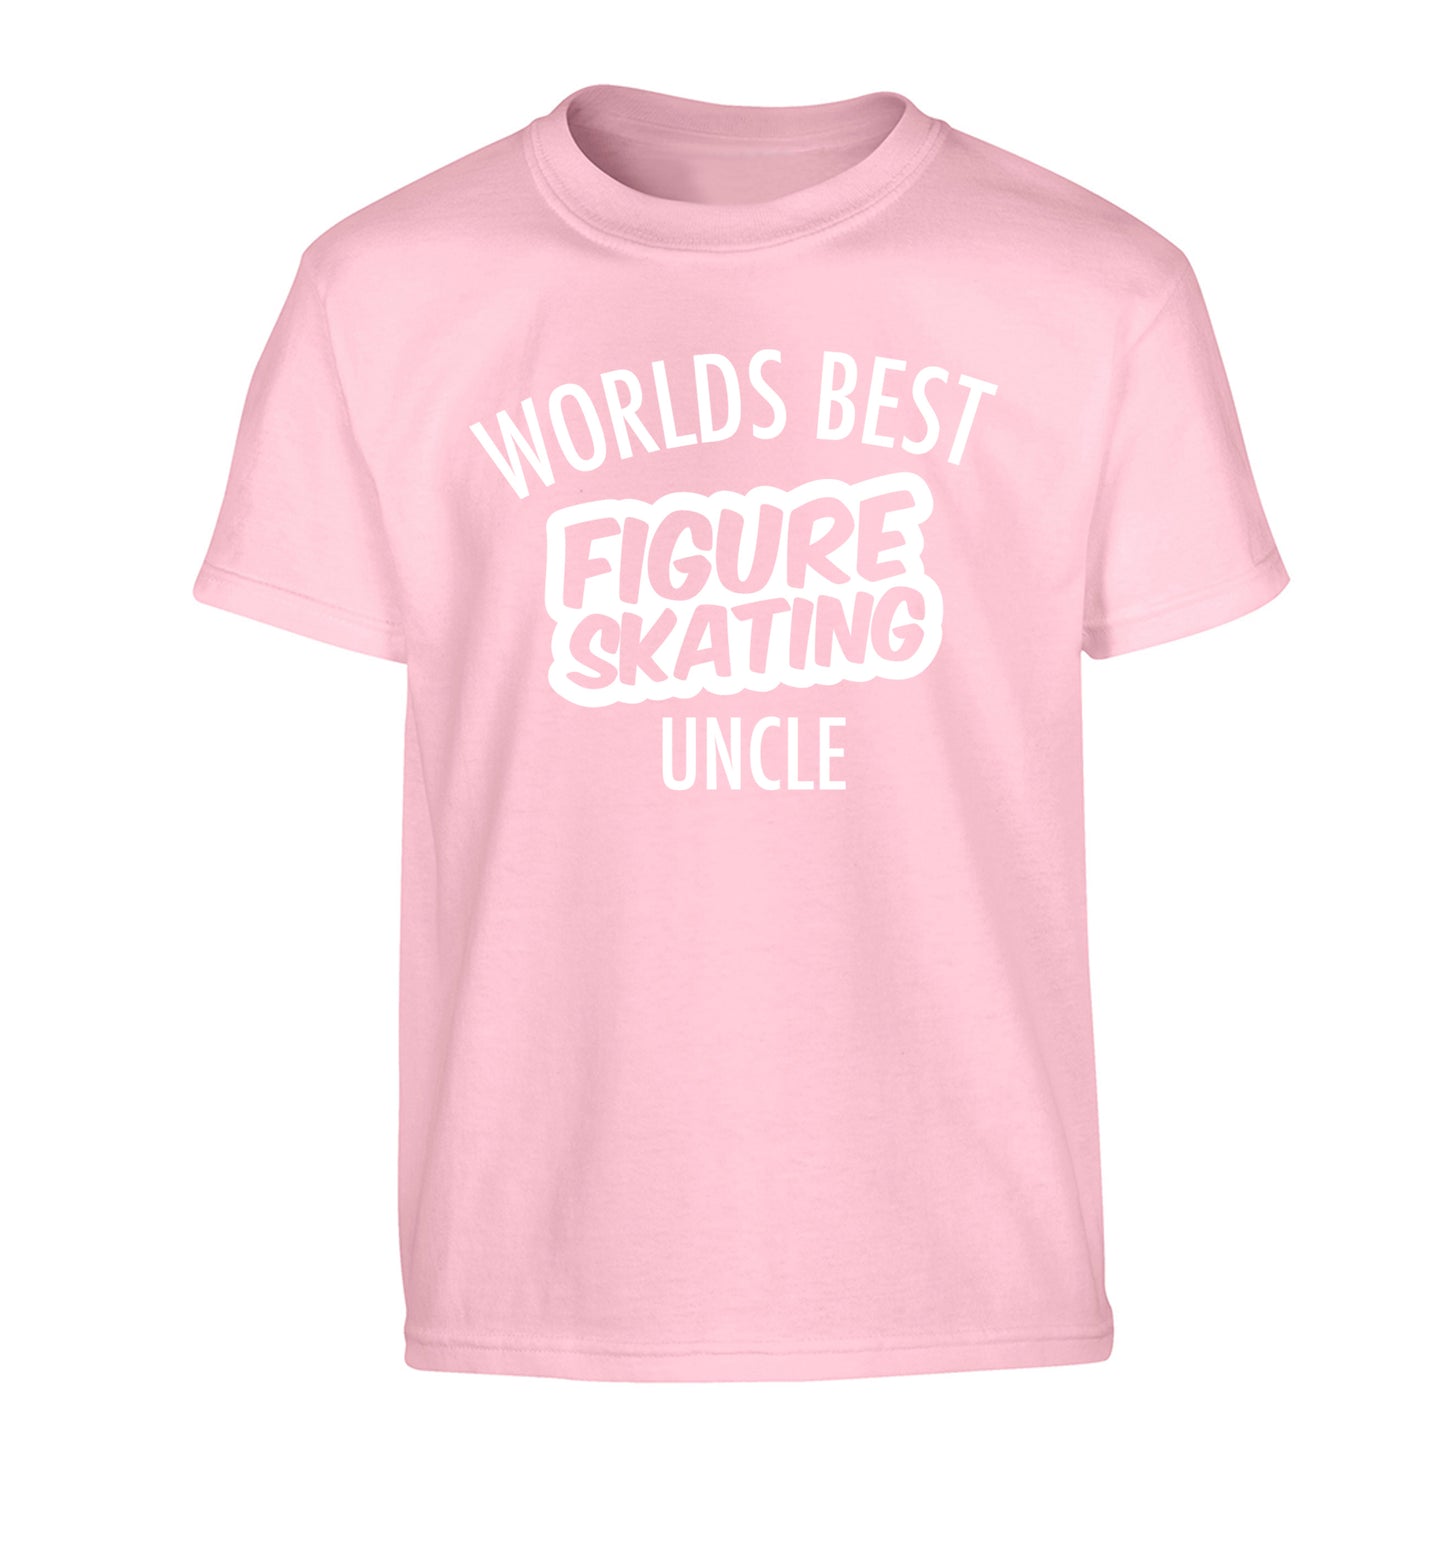 Worlds best figure skating uncle Children's light pink Tshirt 12-14 Years